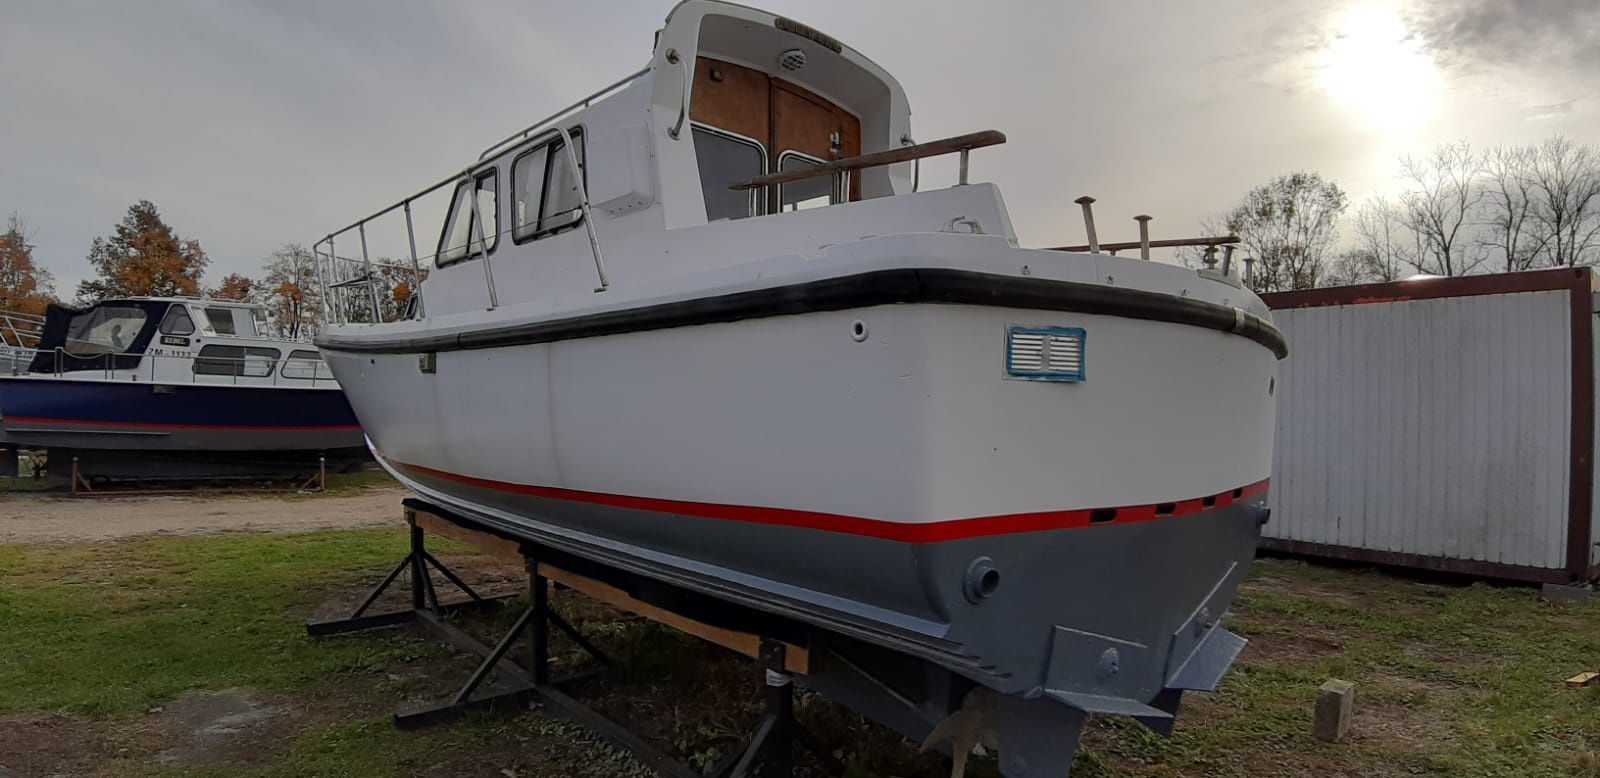 Jacht motorowy hauseboat